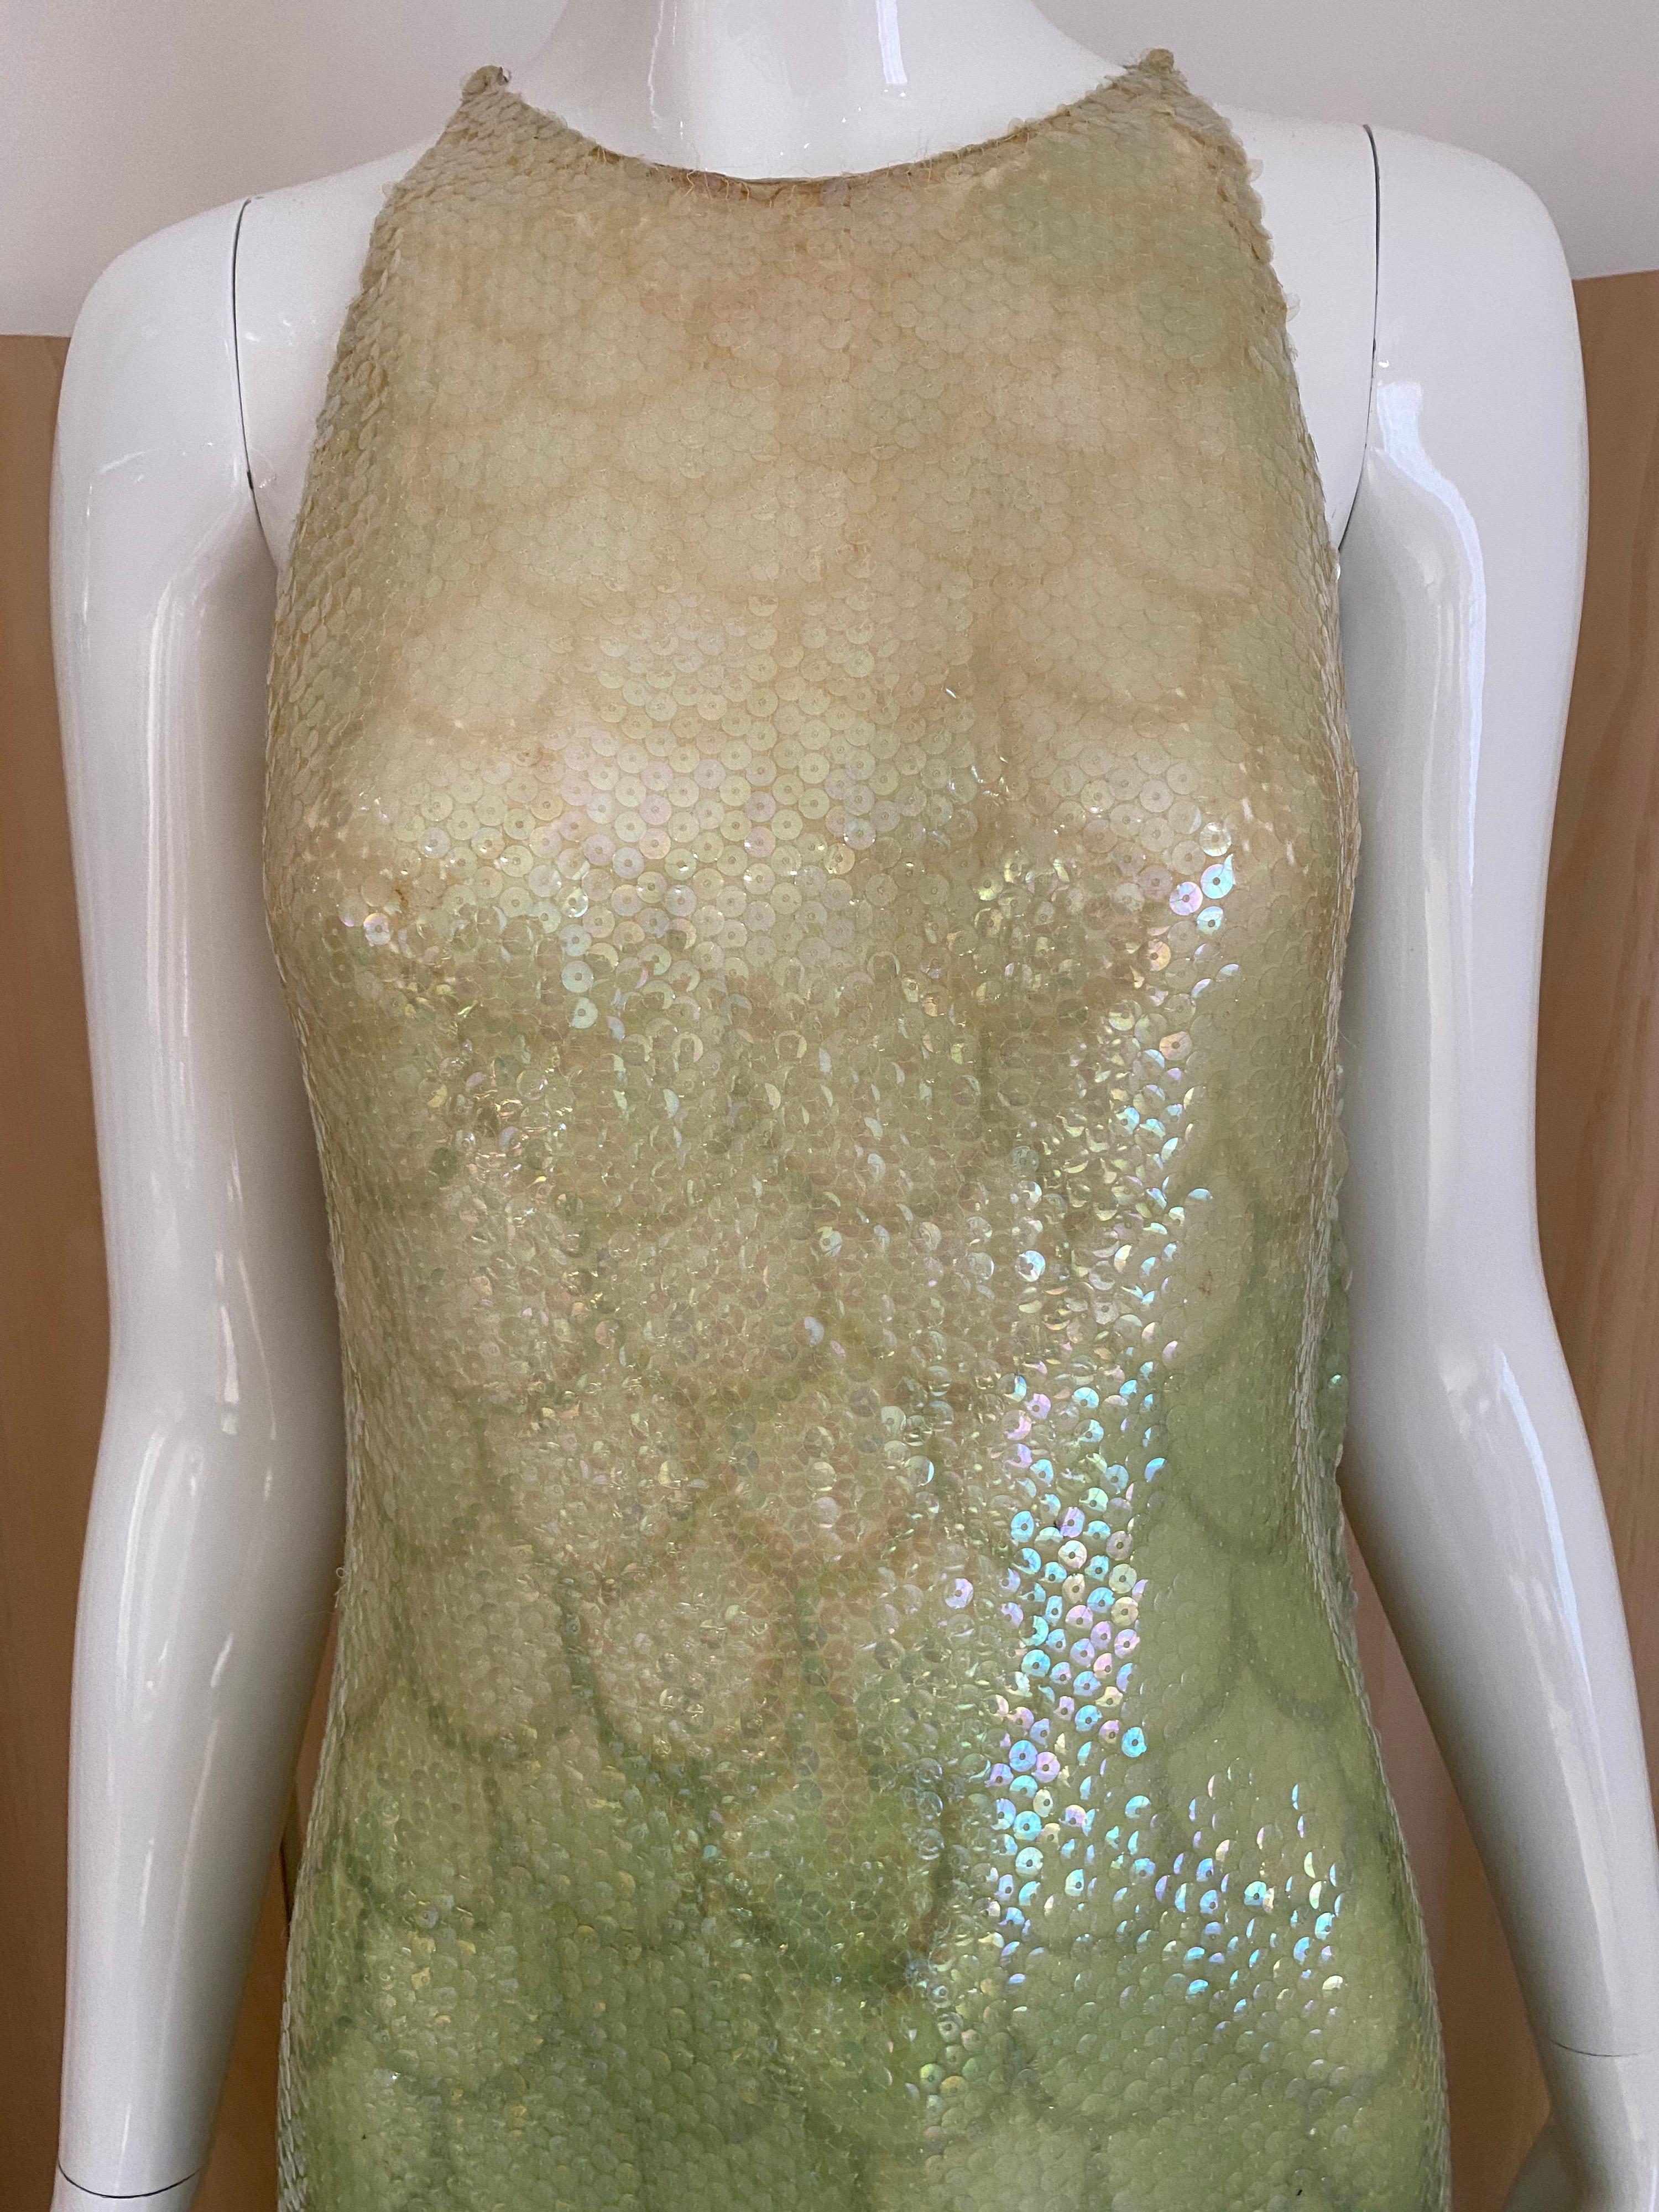 1970s Halston Ombré sleeveless sequin scalloped print iridescent dress.
Collectors item.
Fit size 0/2 (Xsmall)
Bust: 32”/ Waist: 25”/ Hip: 32”